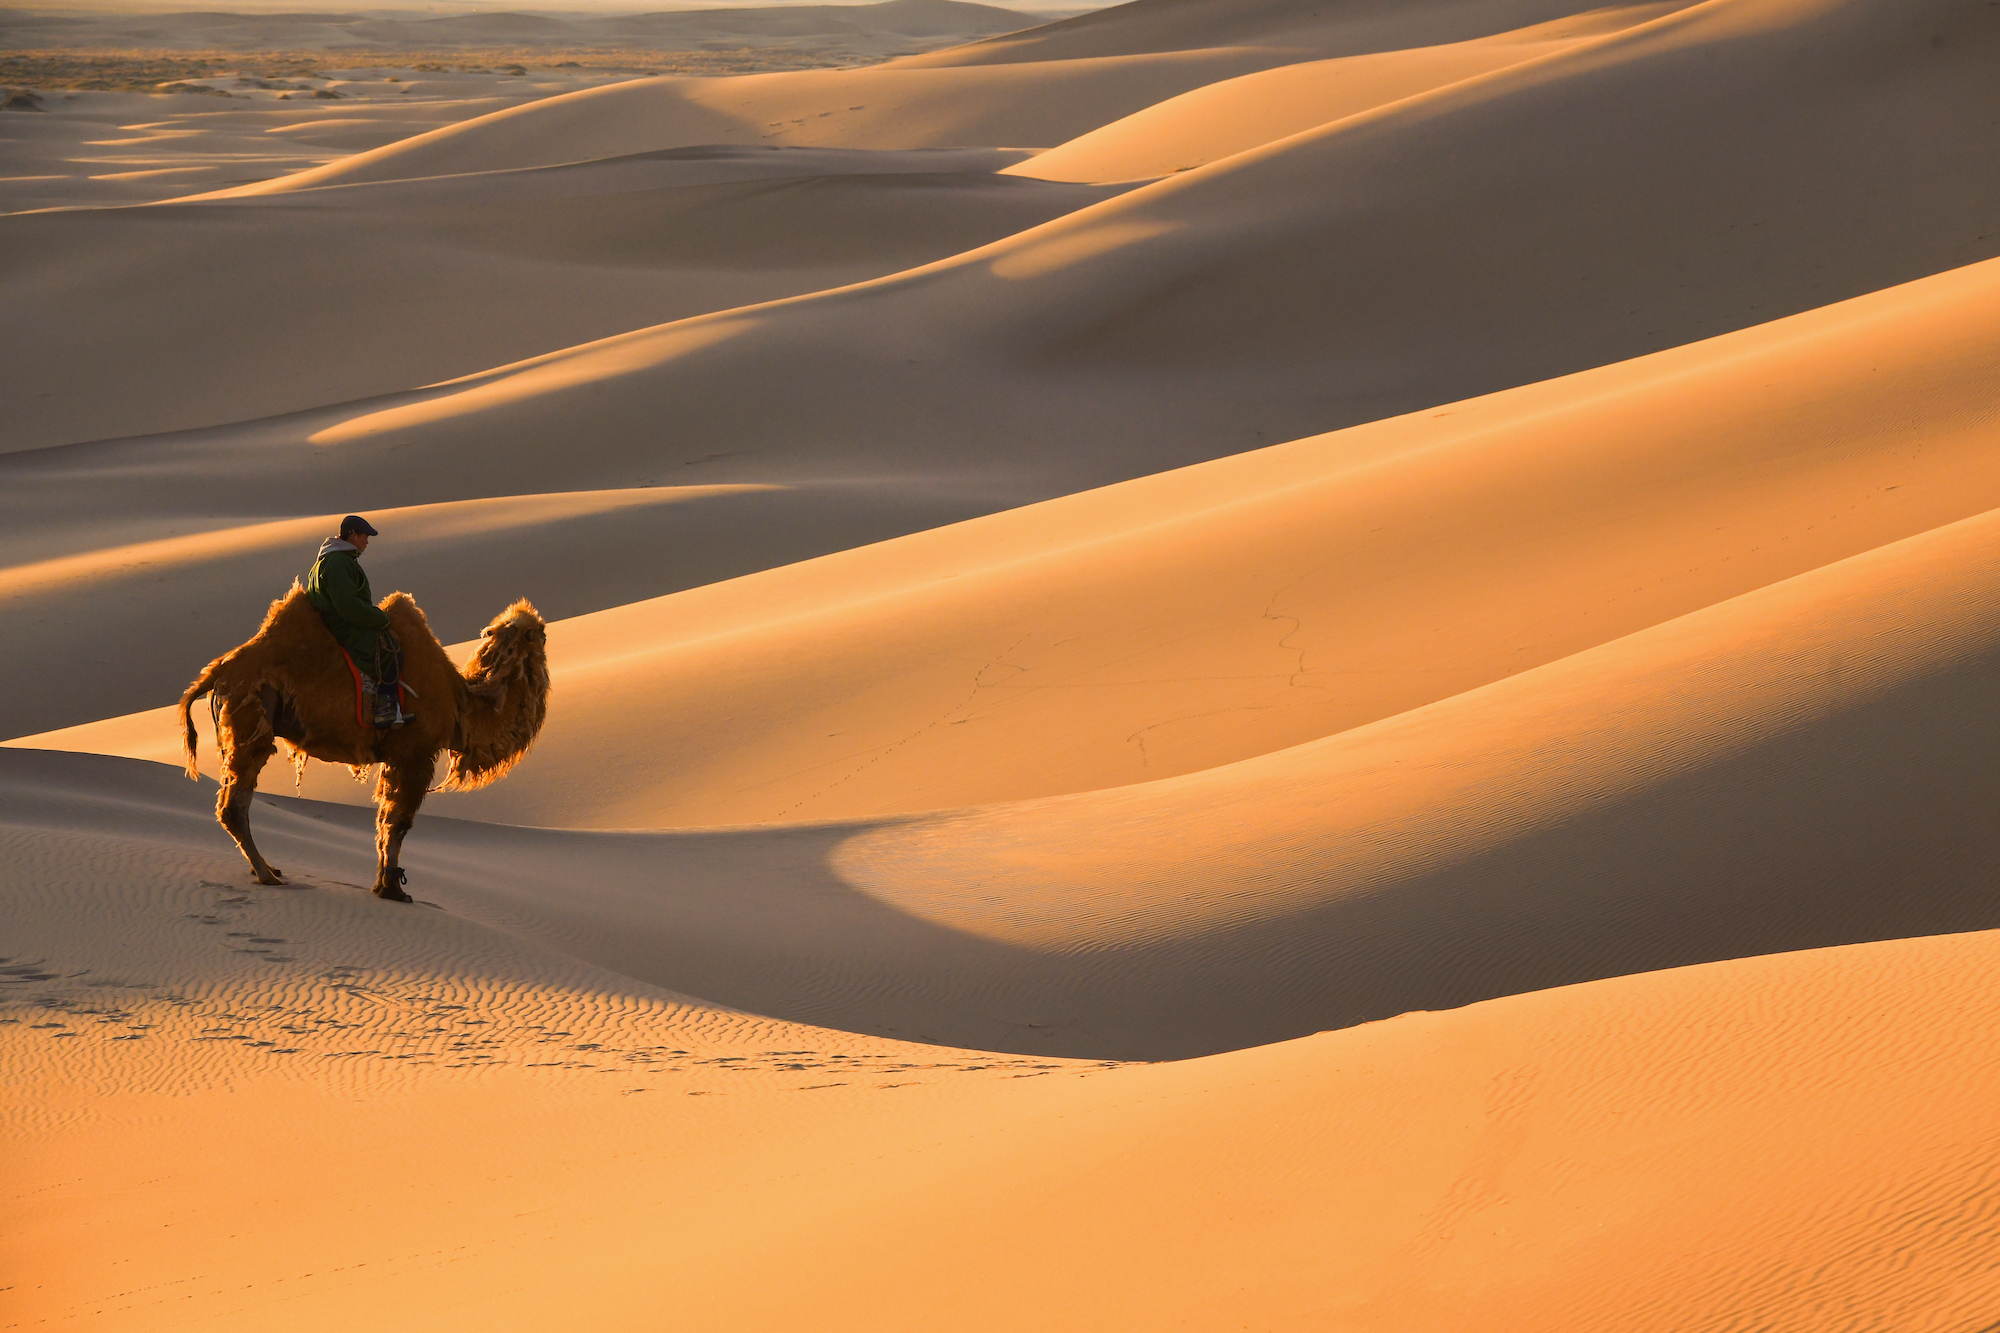 Bactrian camel in the gobi desert of Mongolia.Camels in the Mongolian gobi desert, camel rider in Mongolia desert with sand dunes and dry bushes